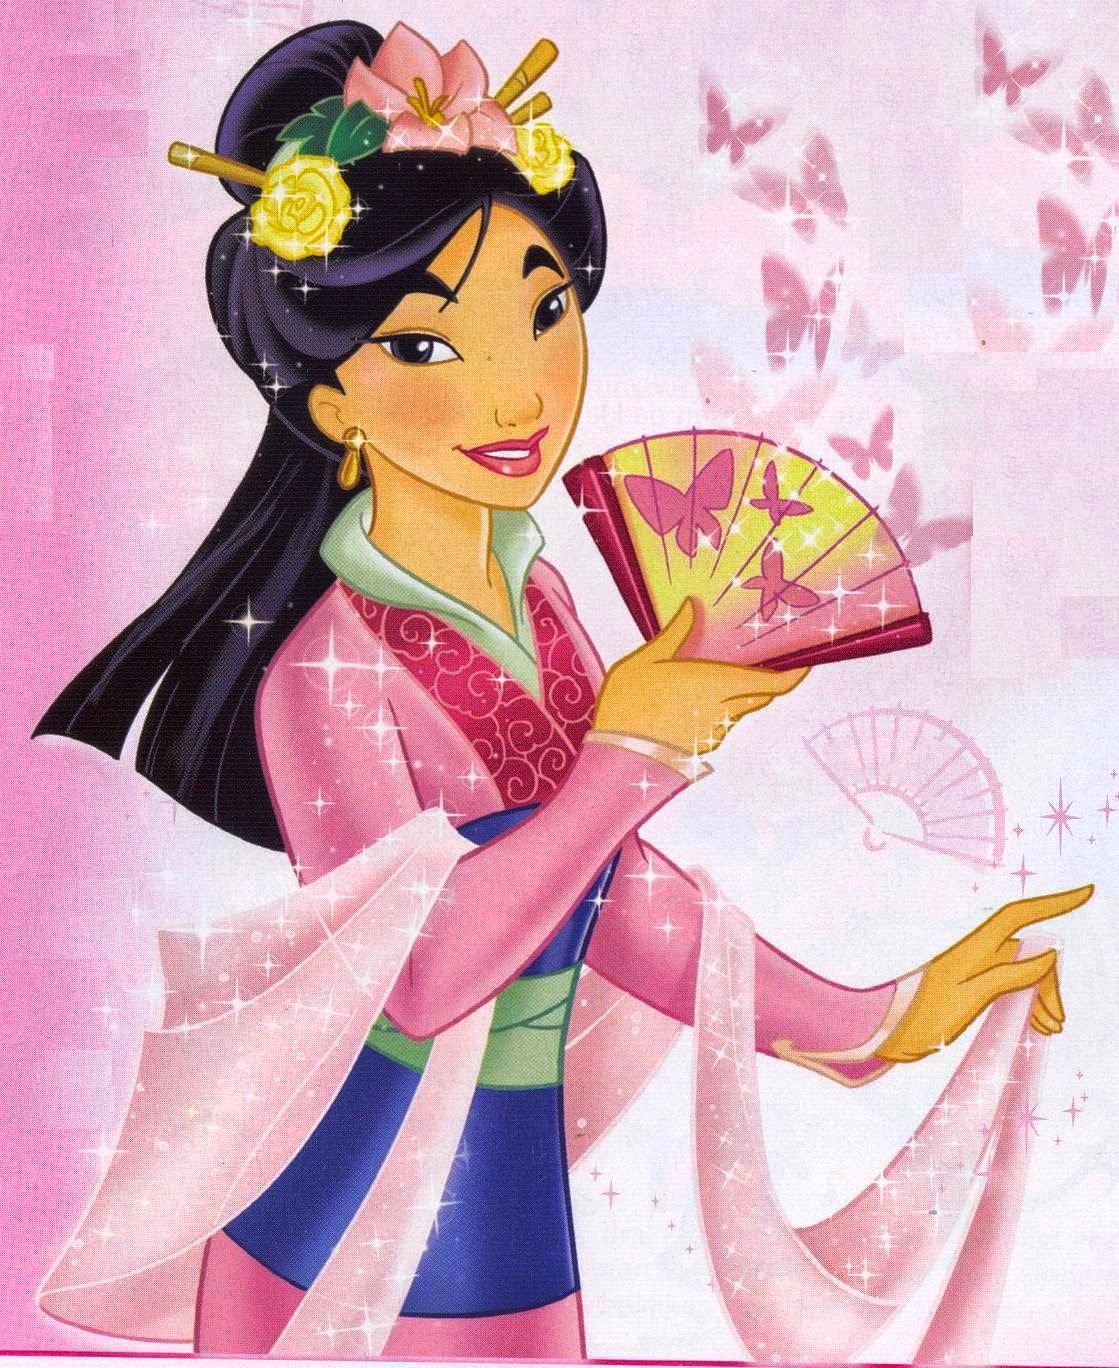 Free Download Disney Princess Wallpapers Disney Wallpapers Mulan Princess Wallpapers